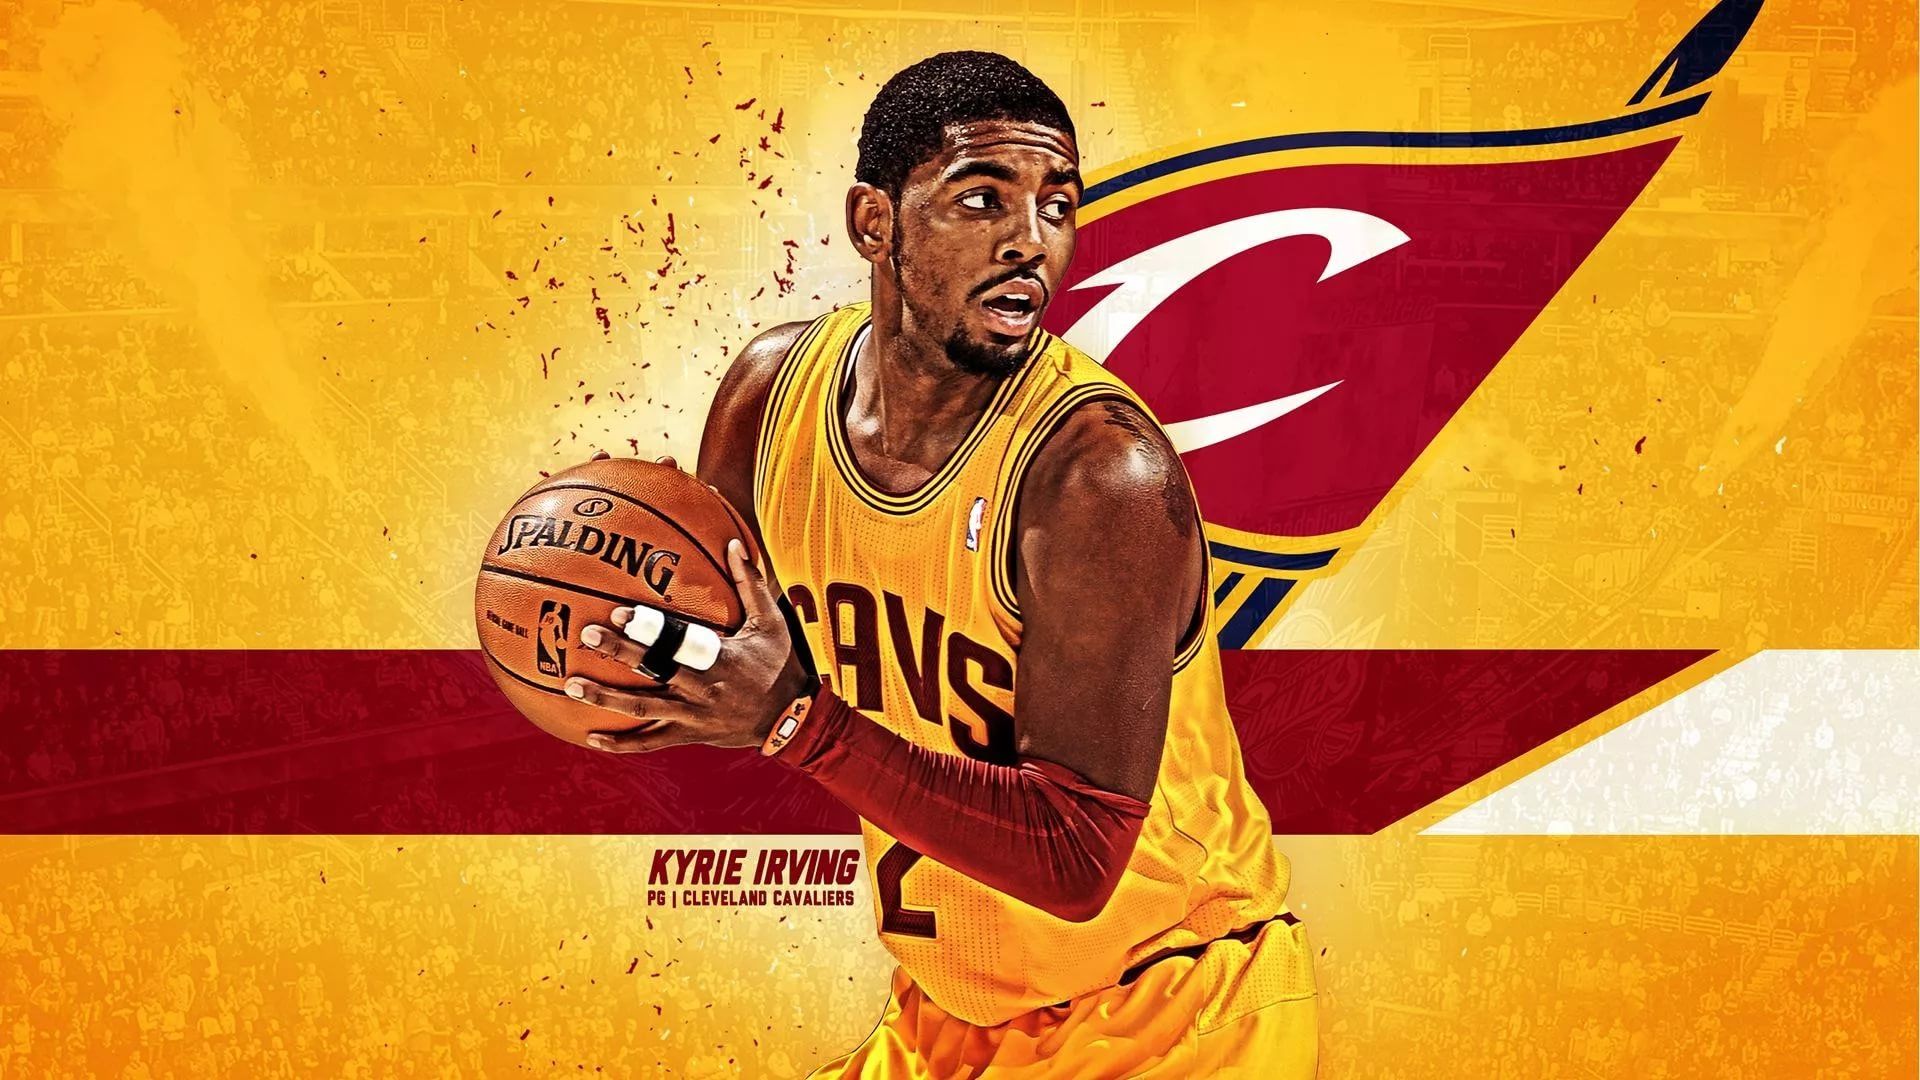 Cleveland Background Wallpaper - Kyrie Irving - HD Wallpaper 